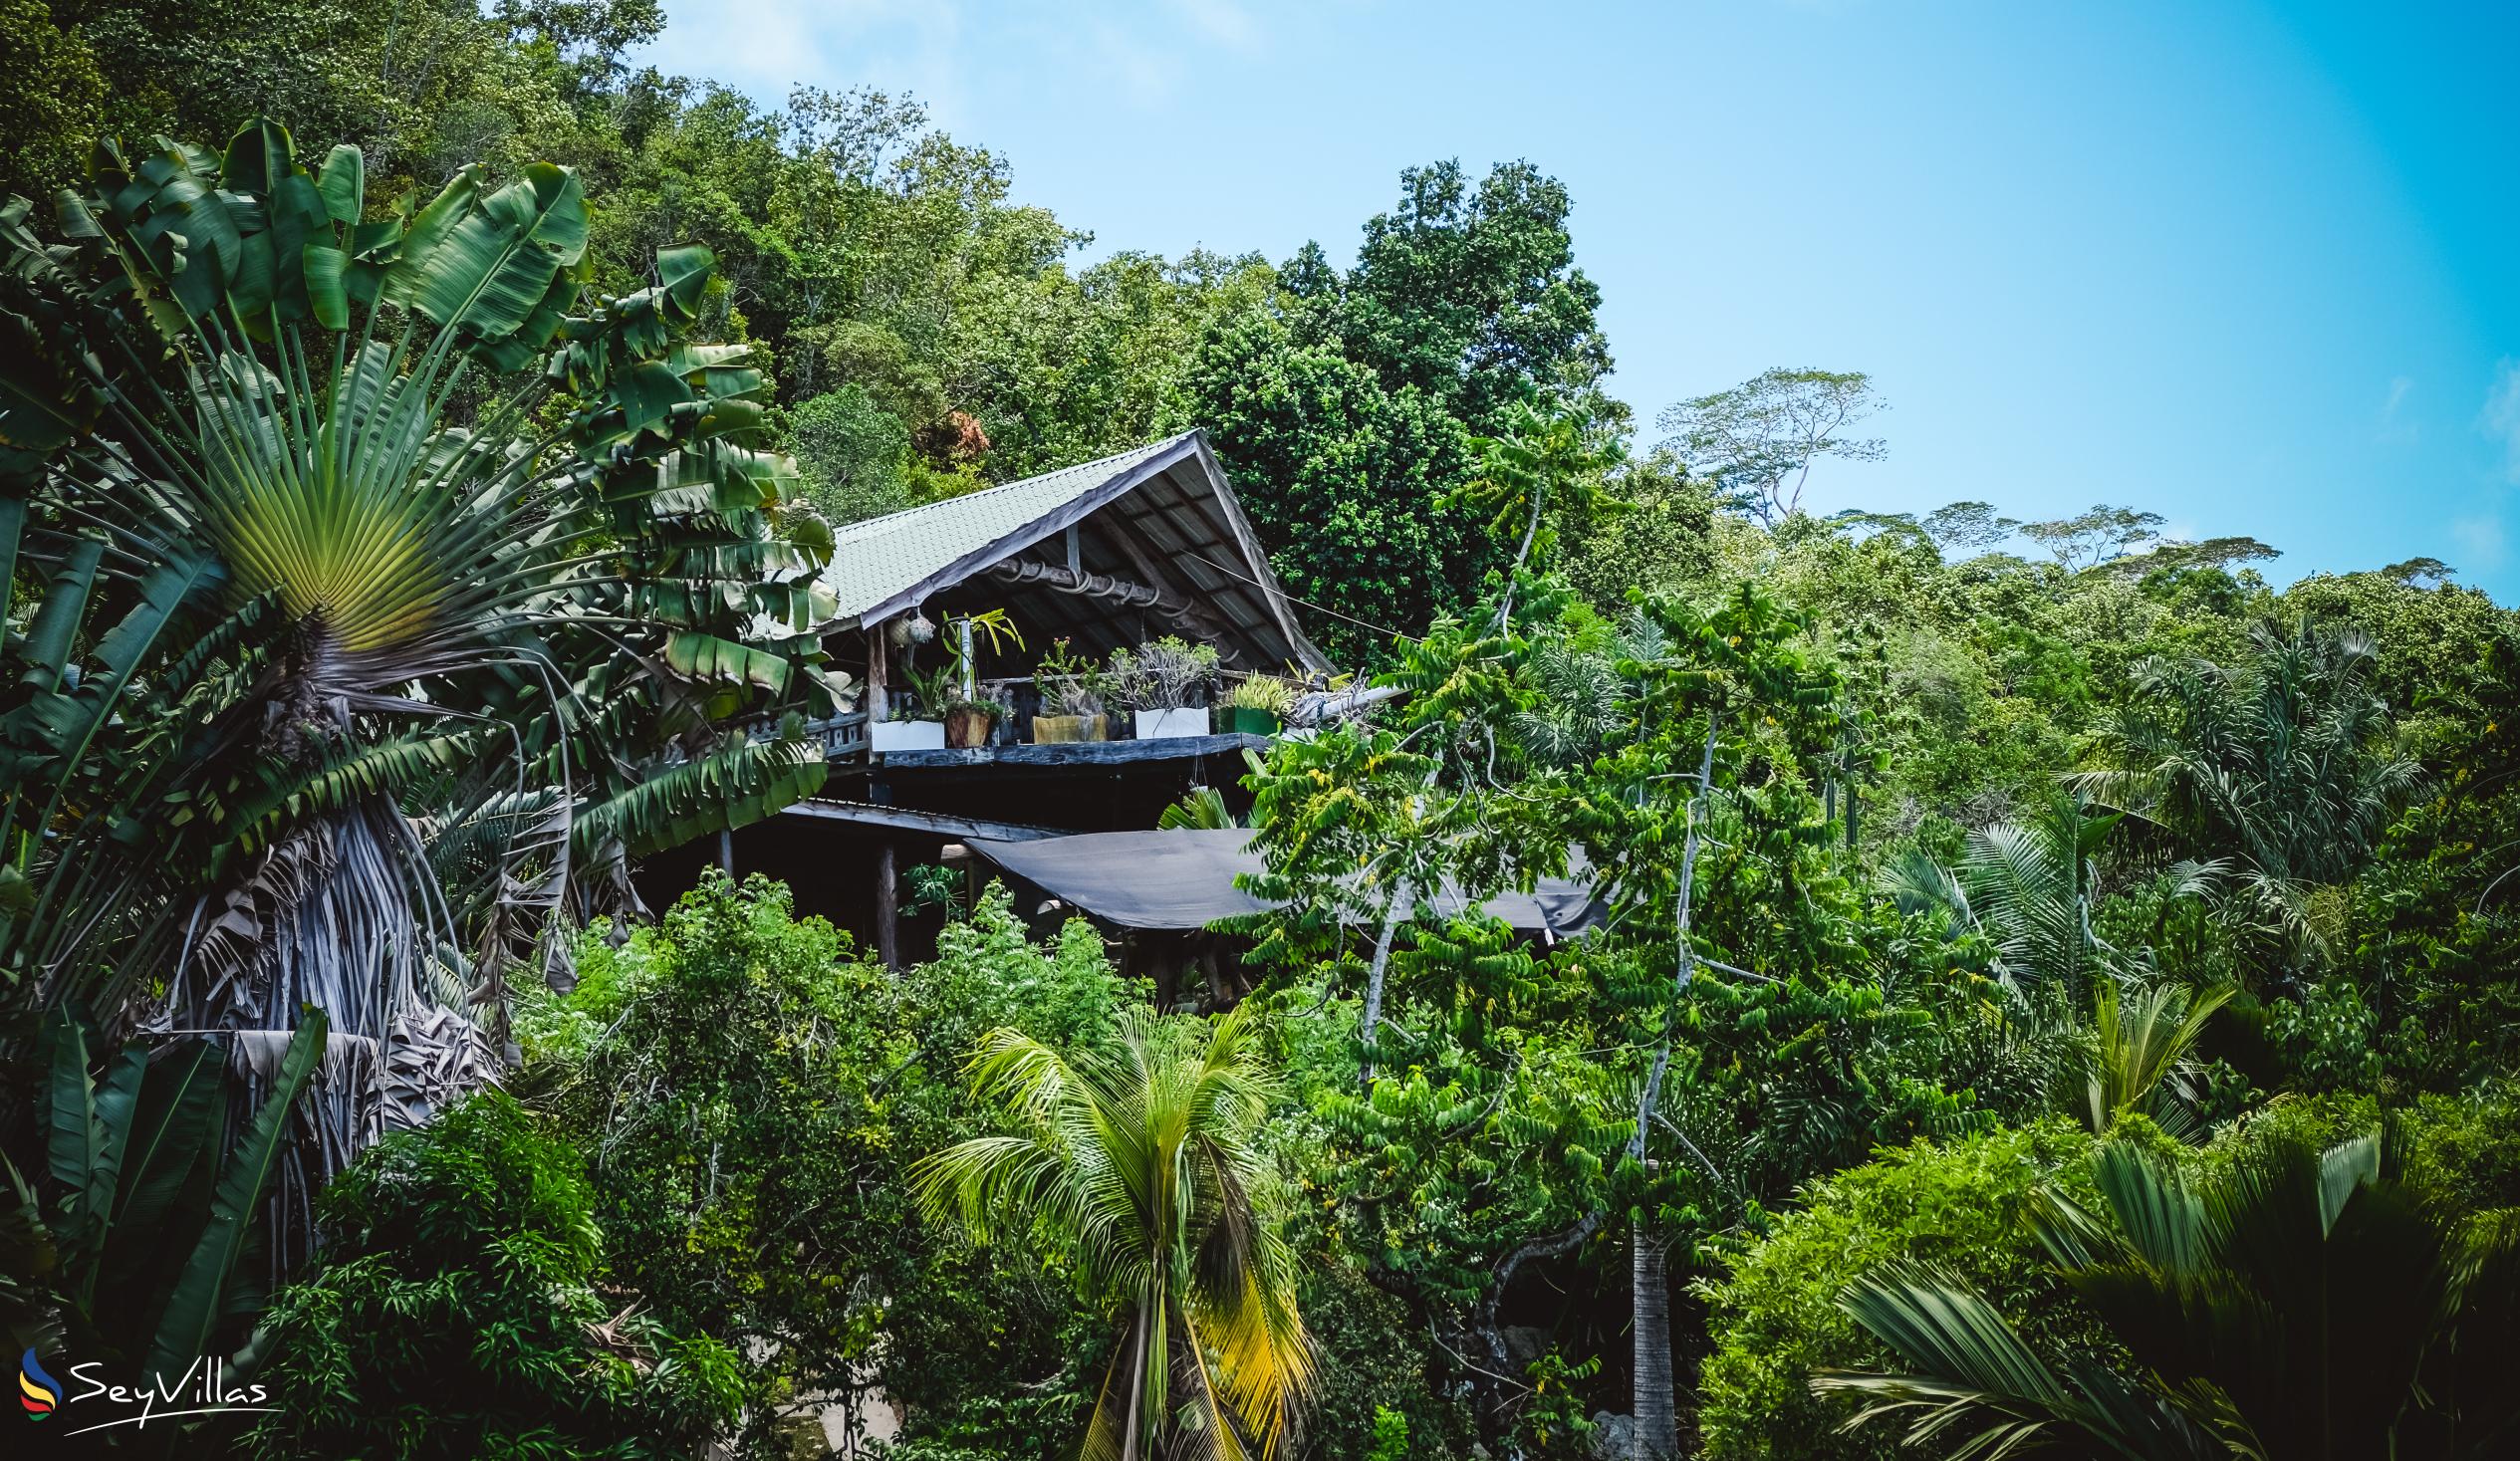 Foto 8: Secret Villa - Aussenbereich - La Digue (Seychellen)